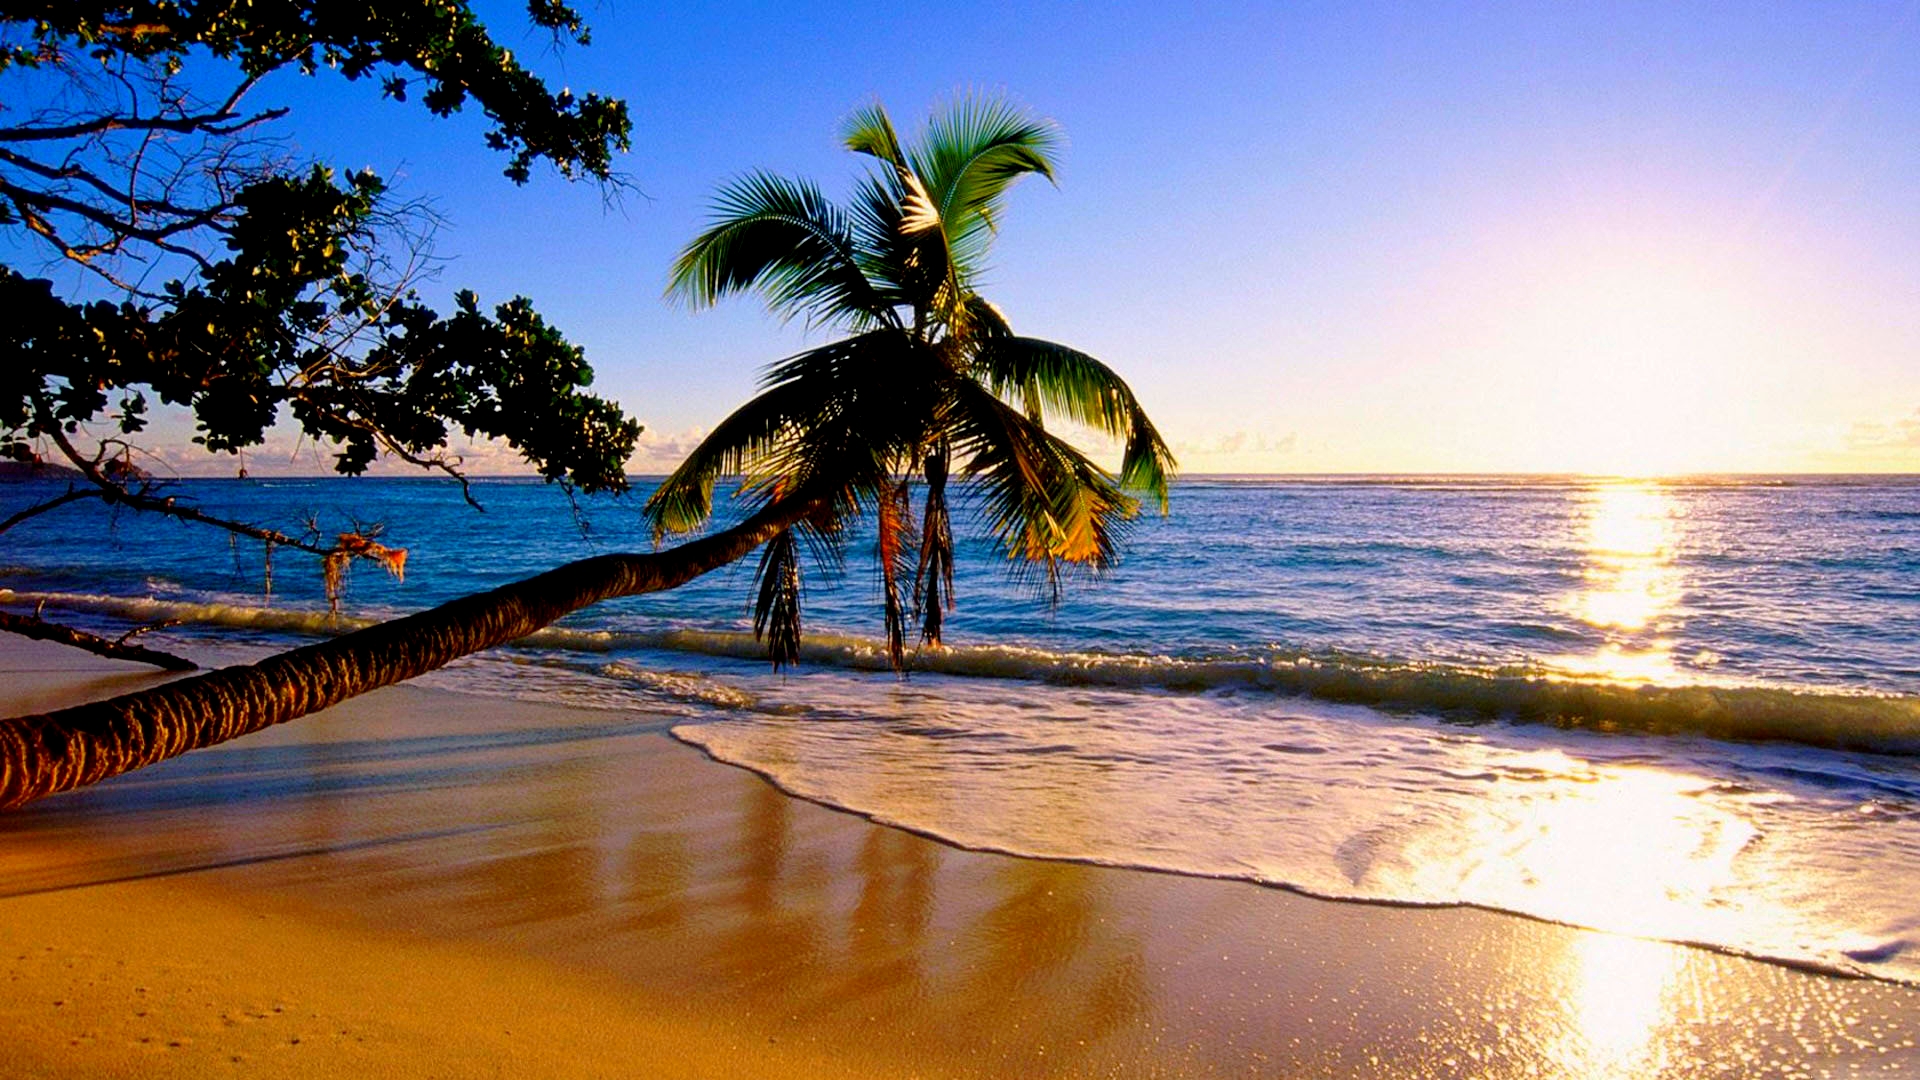 beach live wallpaper,nature,tree,tropics,palm tree,shore